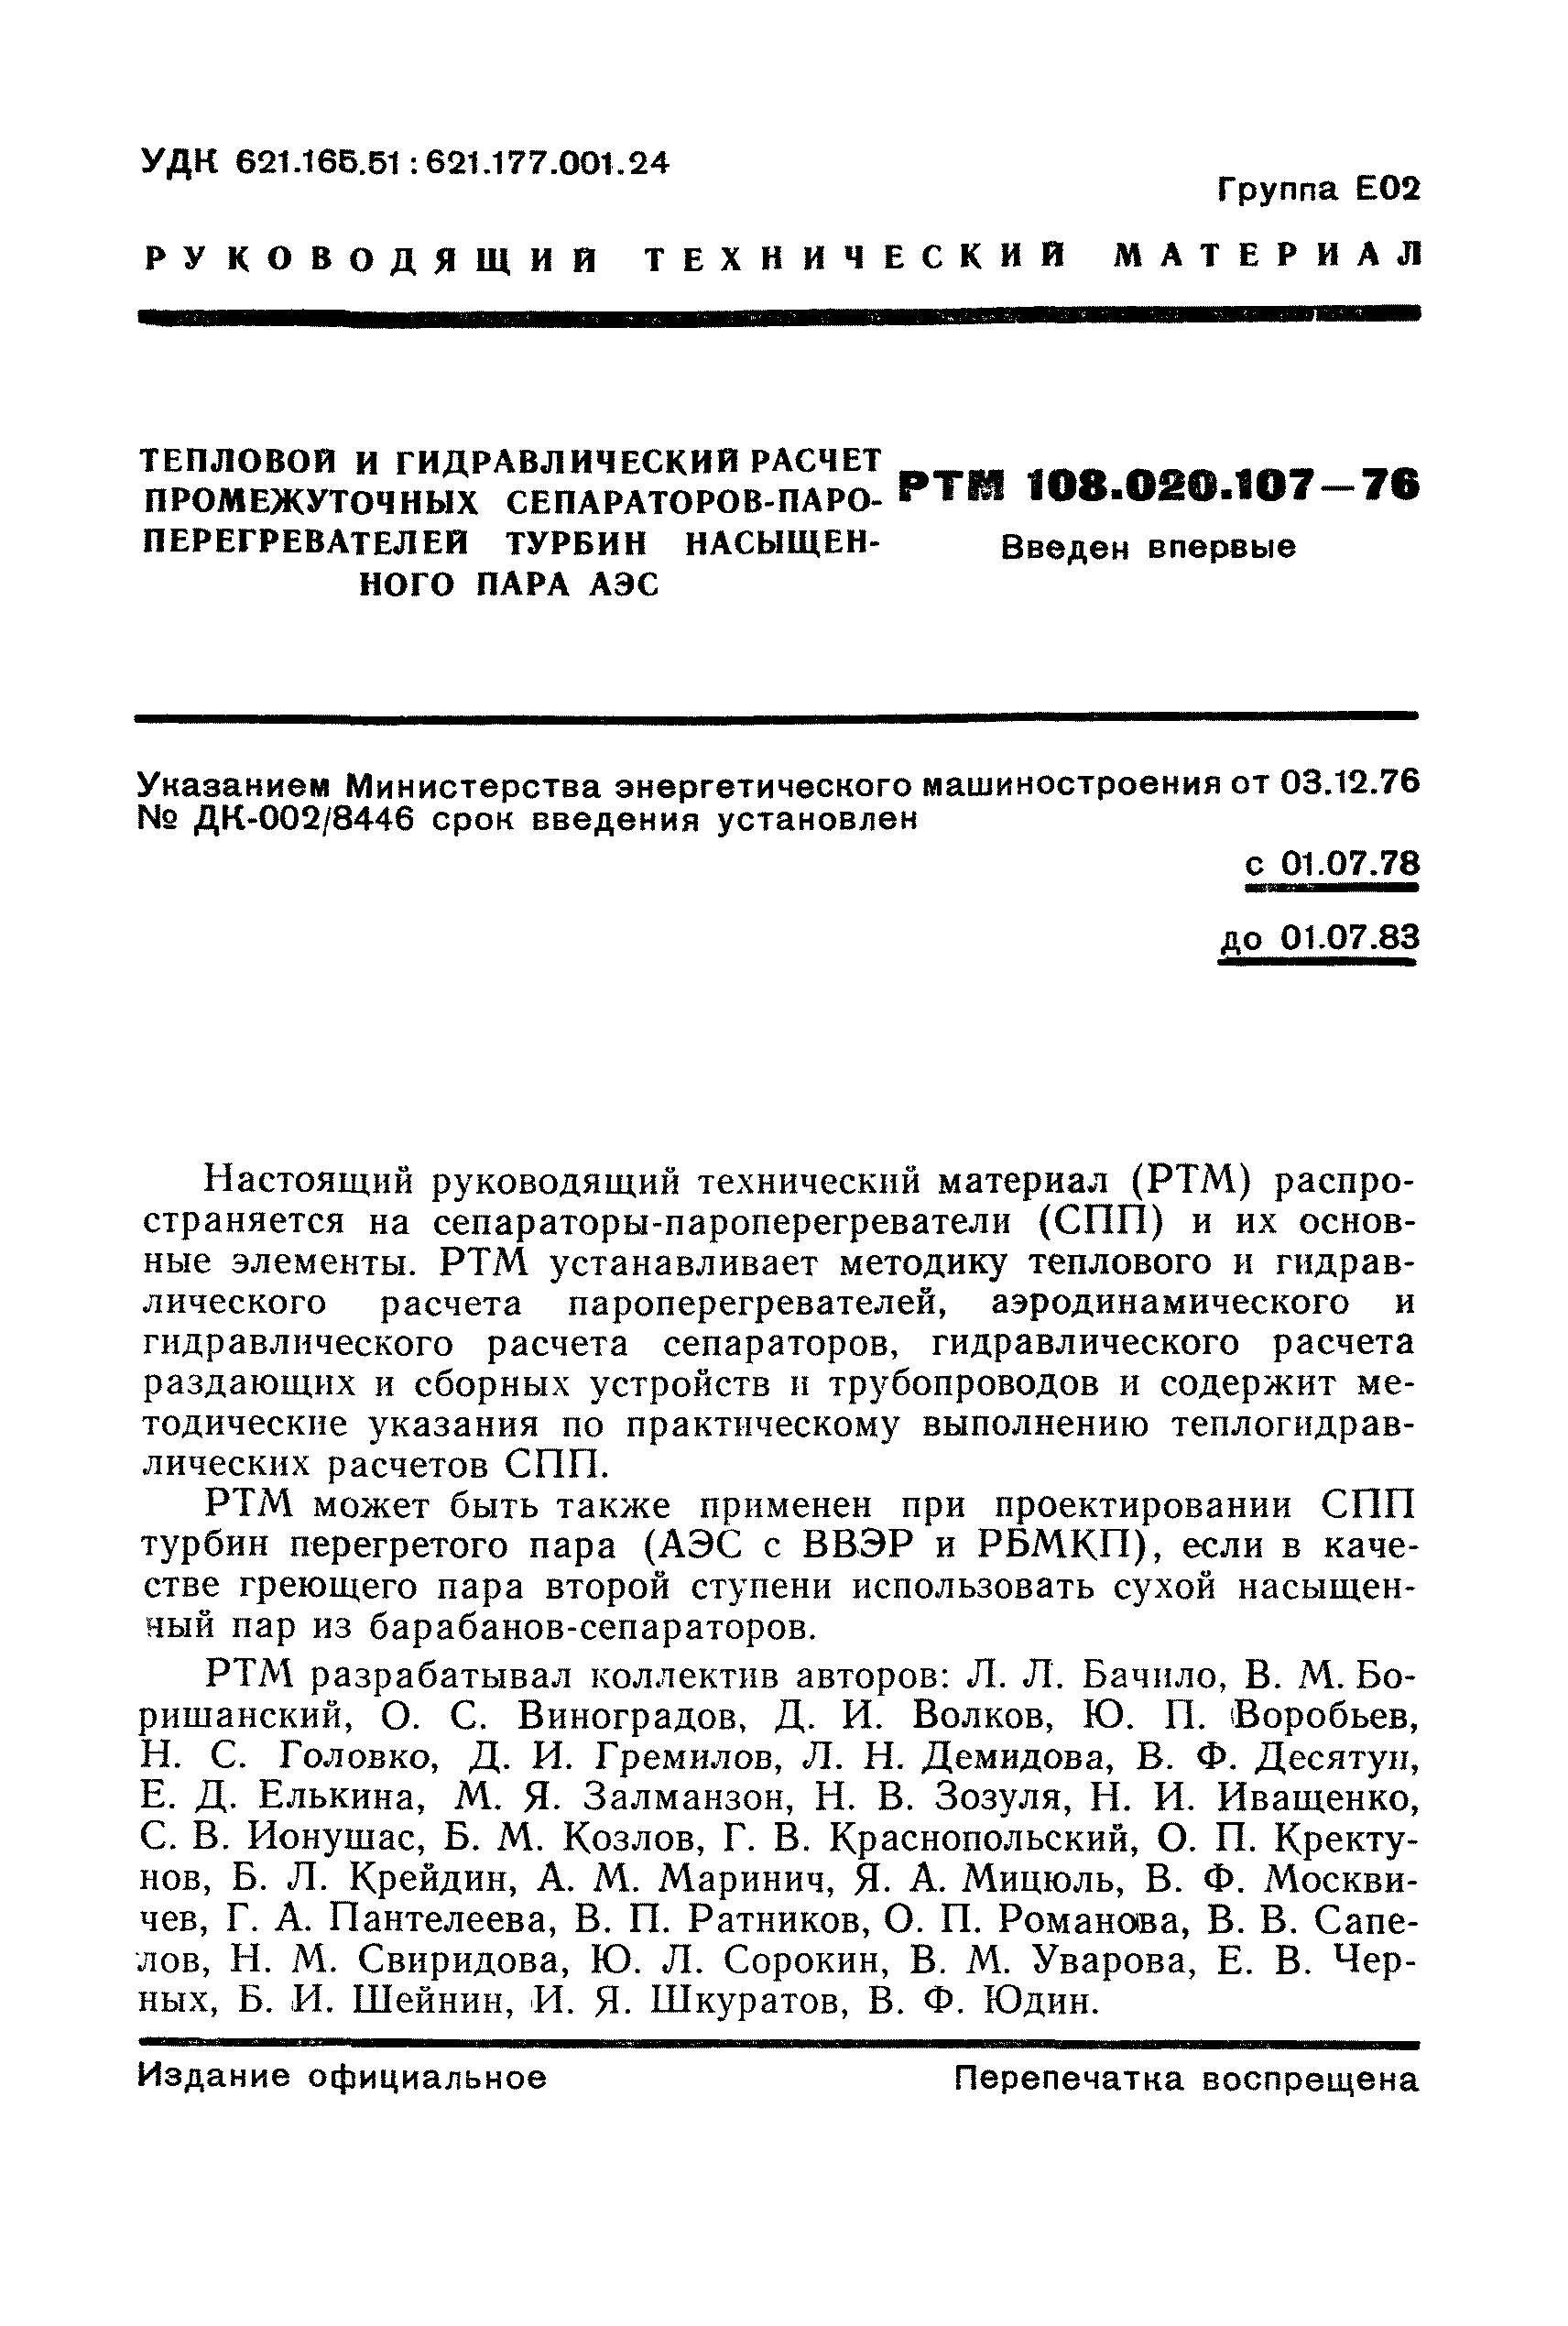 РТМ 108.020.107-76